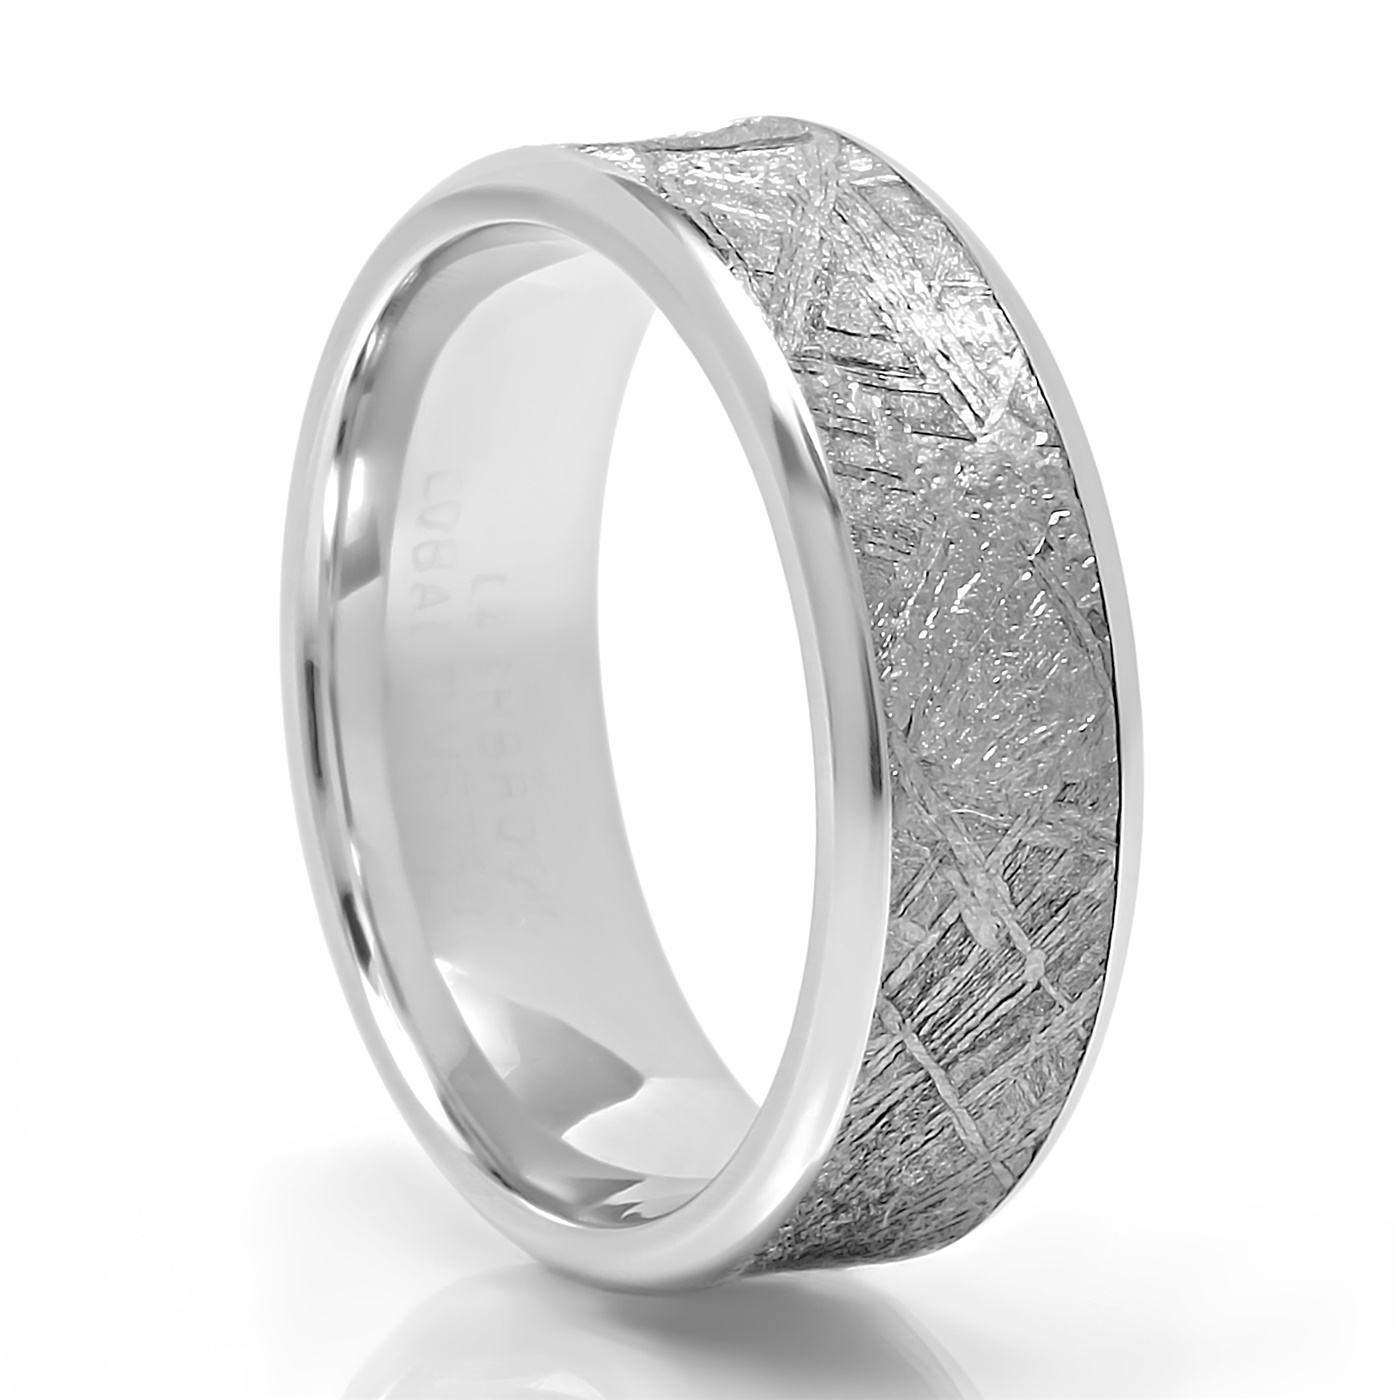 Lashbrook Designs Cobalt and Gibeon Meteorite Mans Ring